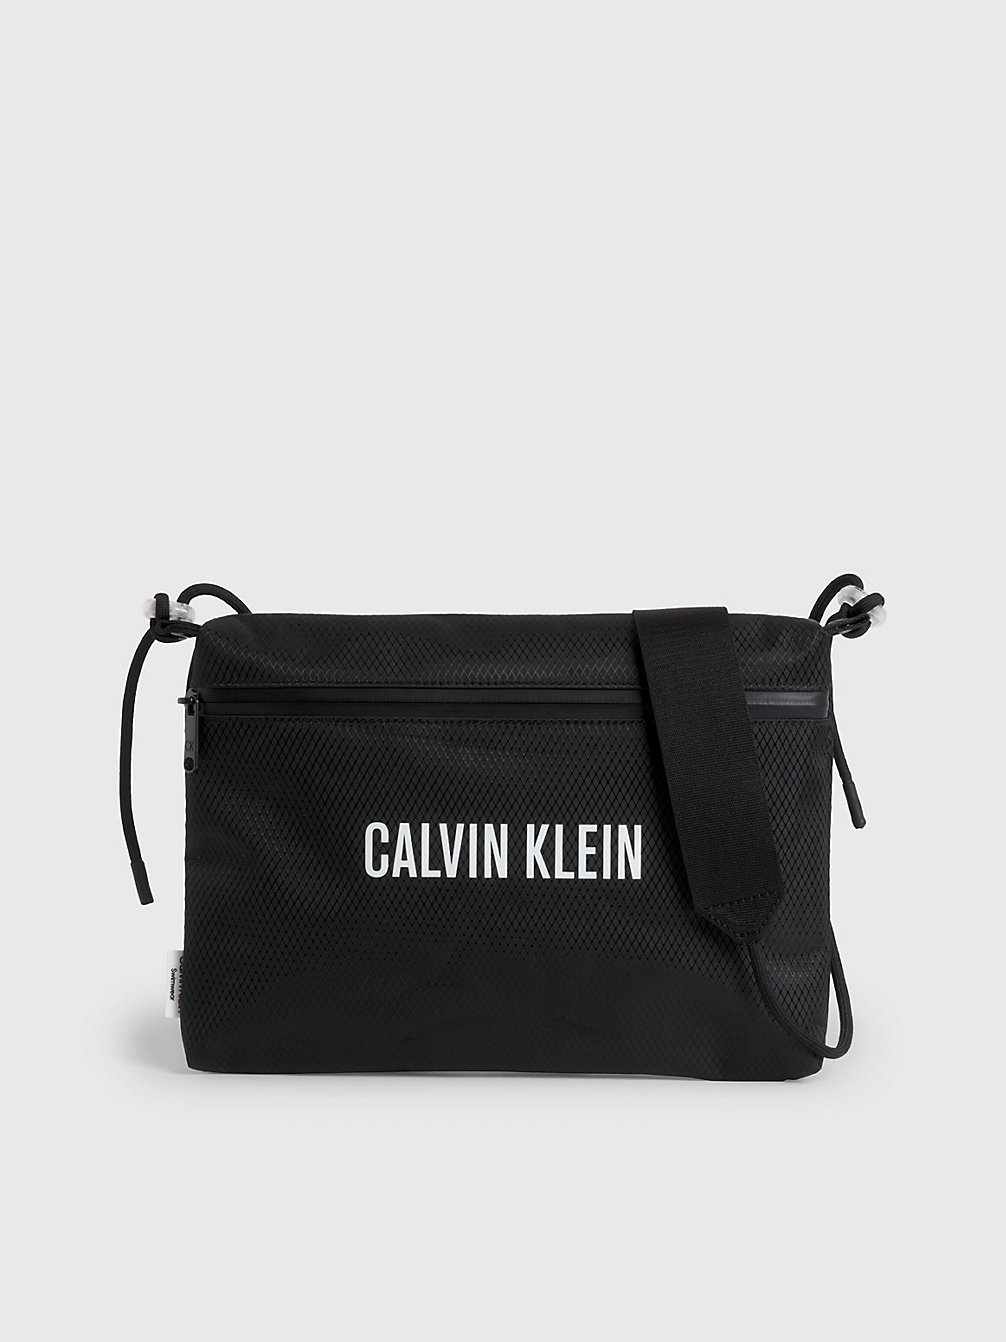 PVH BLACK Borsa Da Spiaggia A Tracolla undefined unisex Calvin Klein